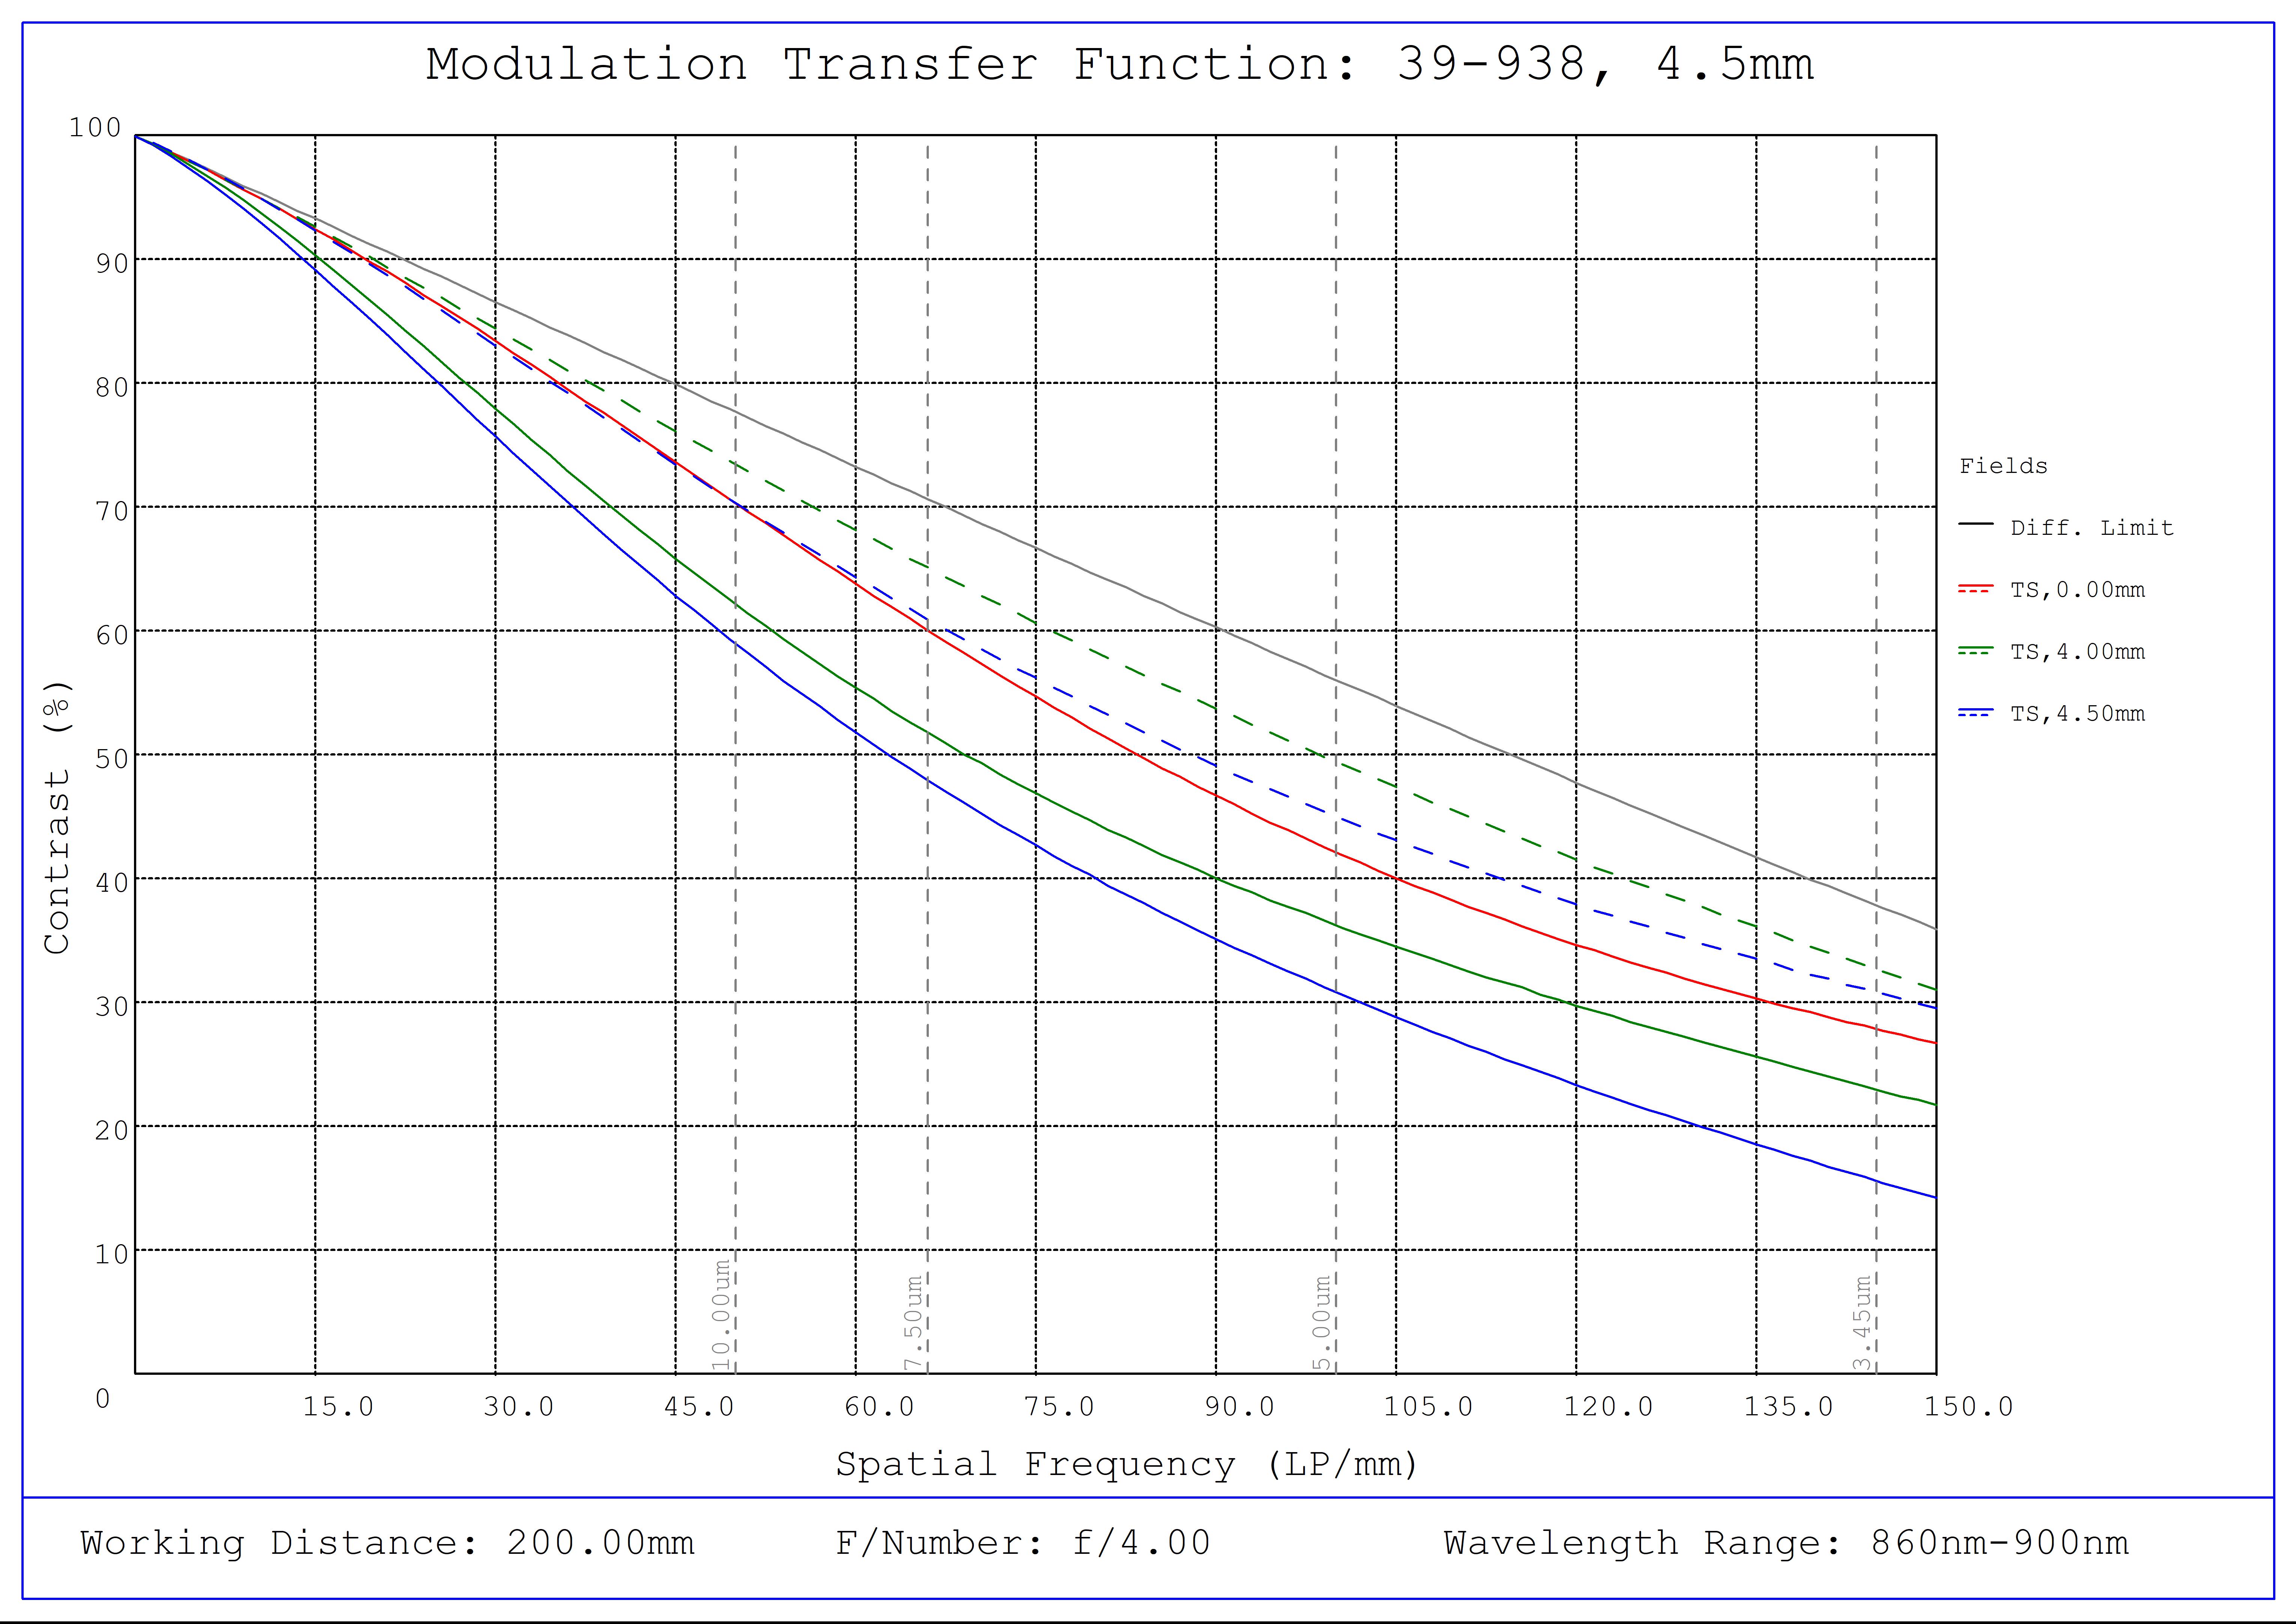 #39-938, 4.5mm C VIS-NIR Series Fixed Focal Length Lens, Modulated Transfer Function (MTF) Plot (NIR), 200mm Working Distance, f4